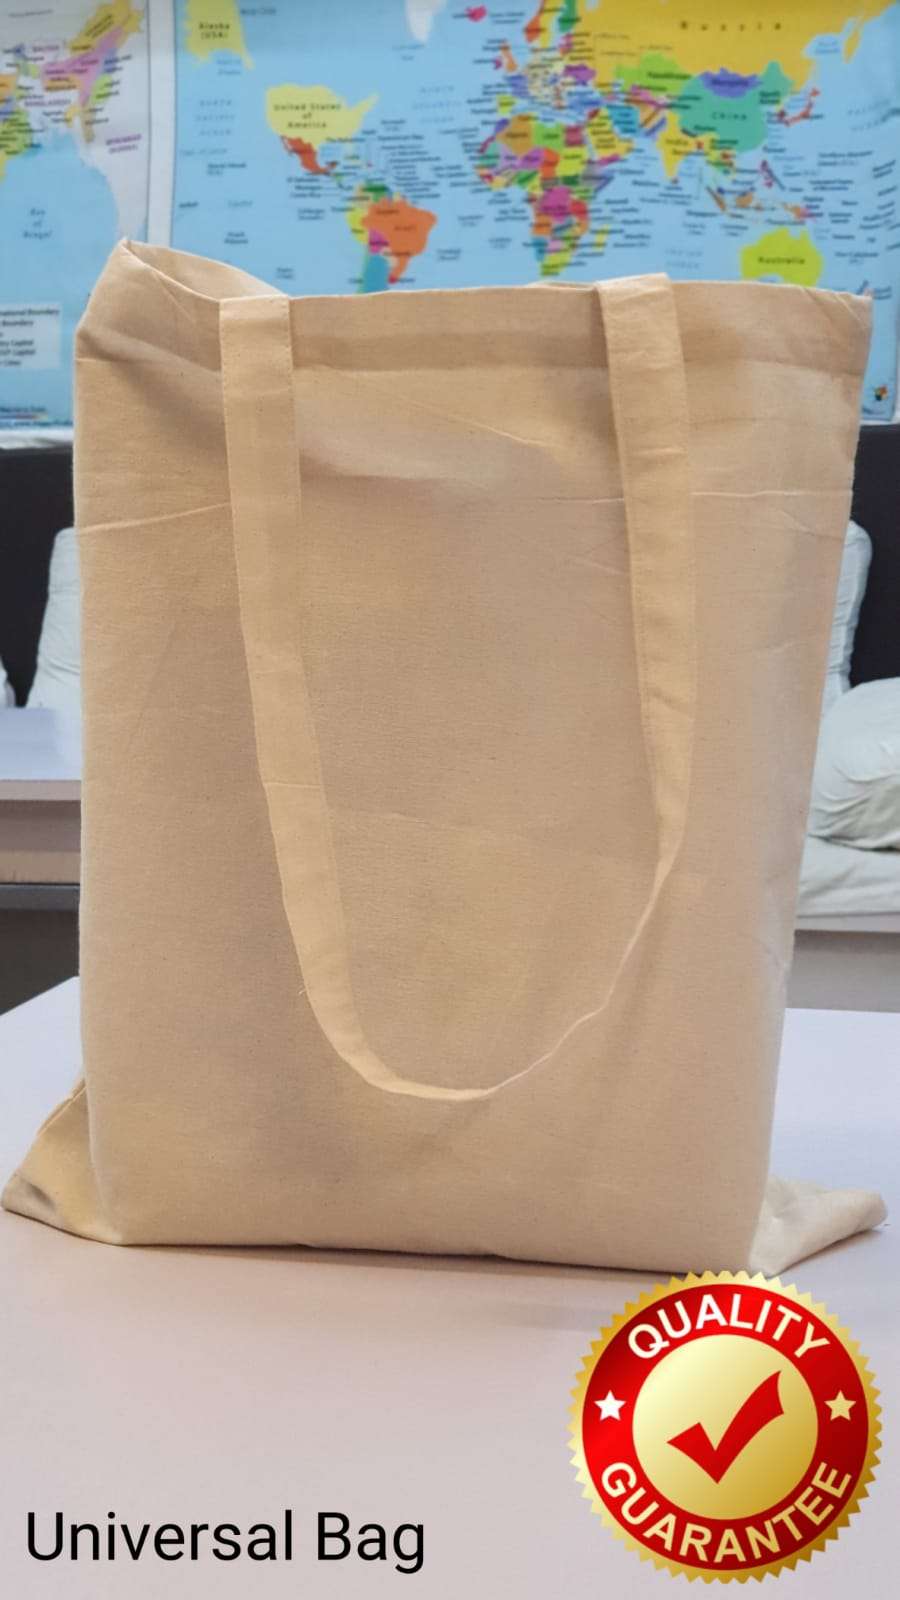 Universal Bag by ff bag collection 